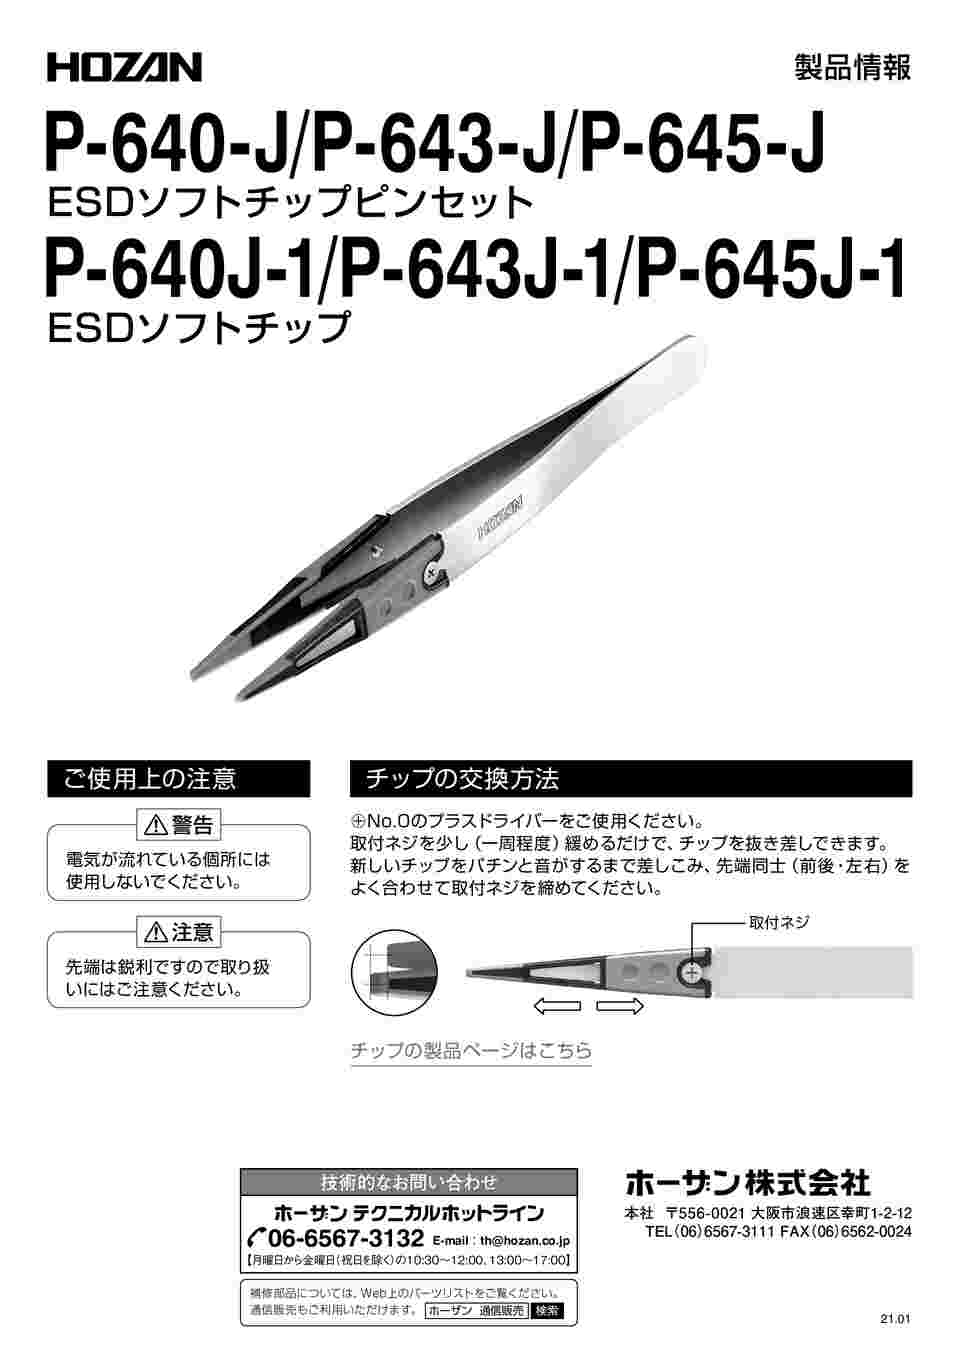 64-8896-98 ESDソフトチップピンセット P-645-J 【AXEL】 アズワン